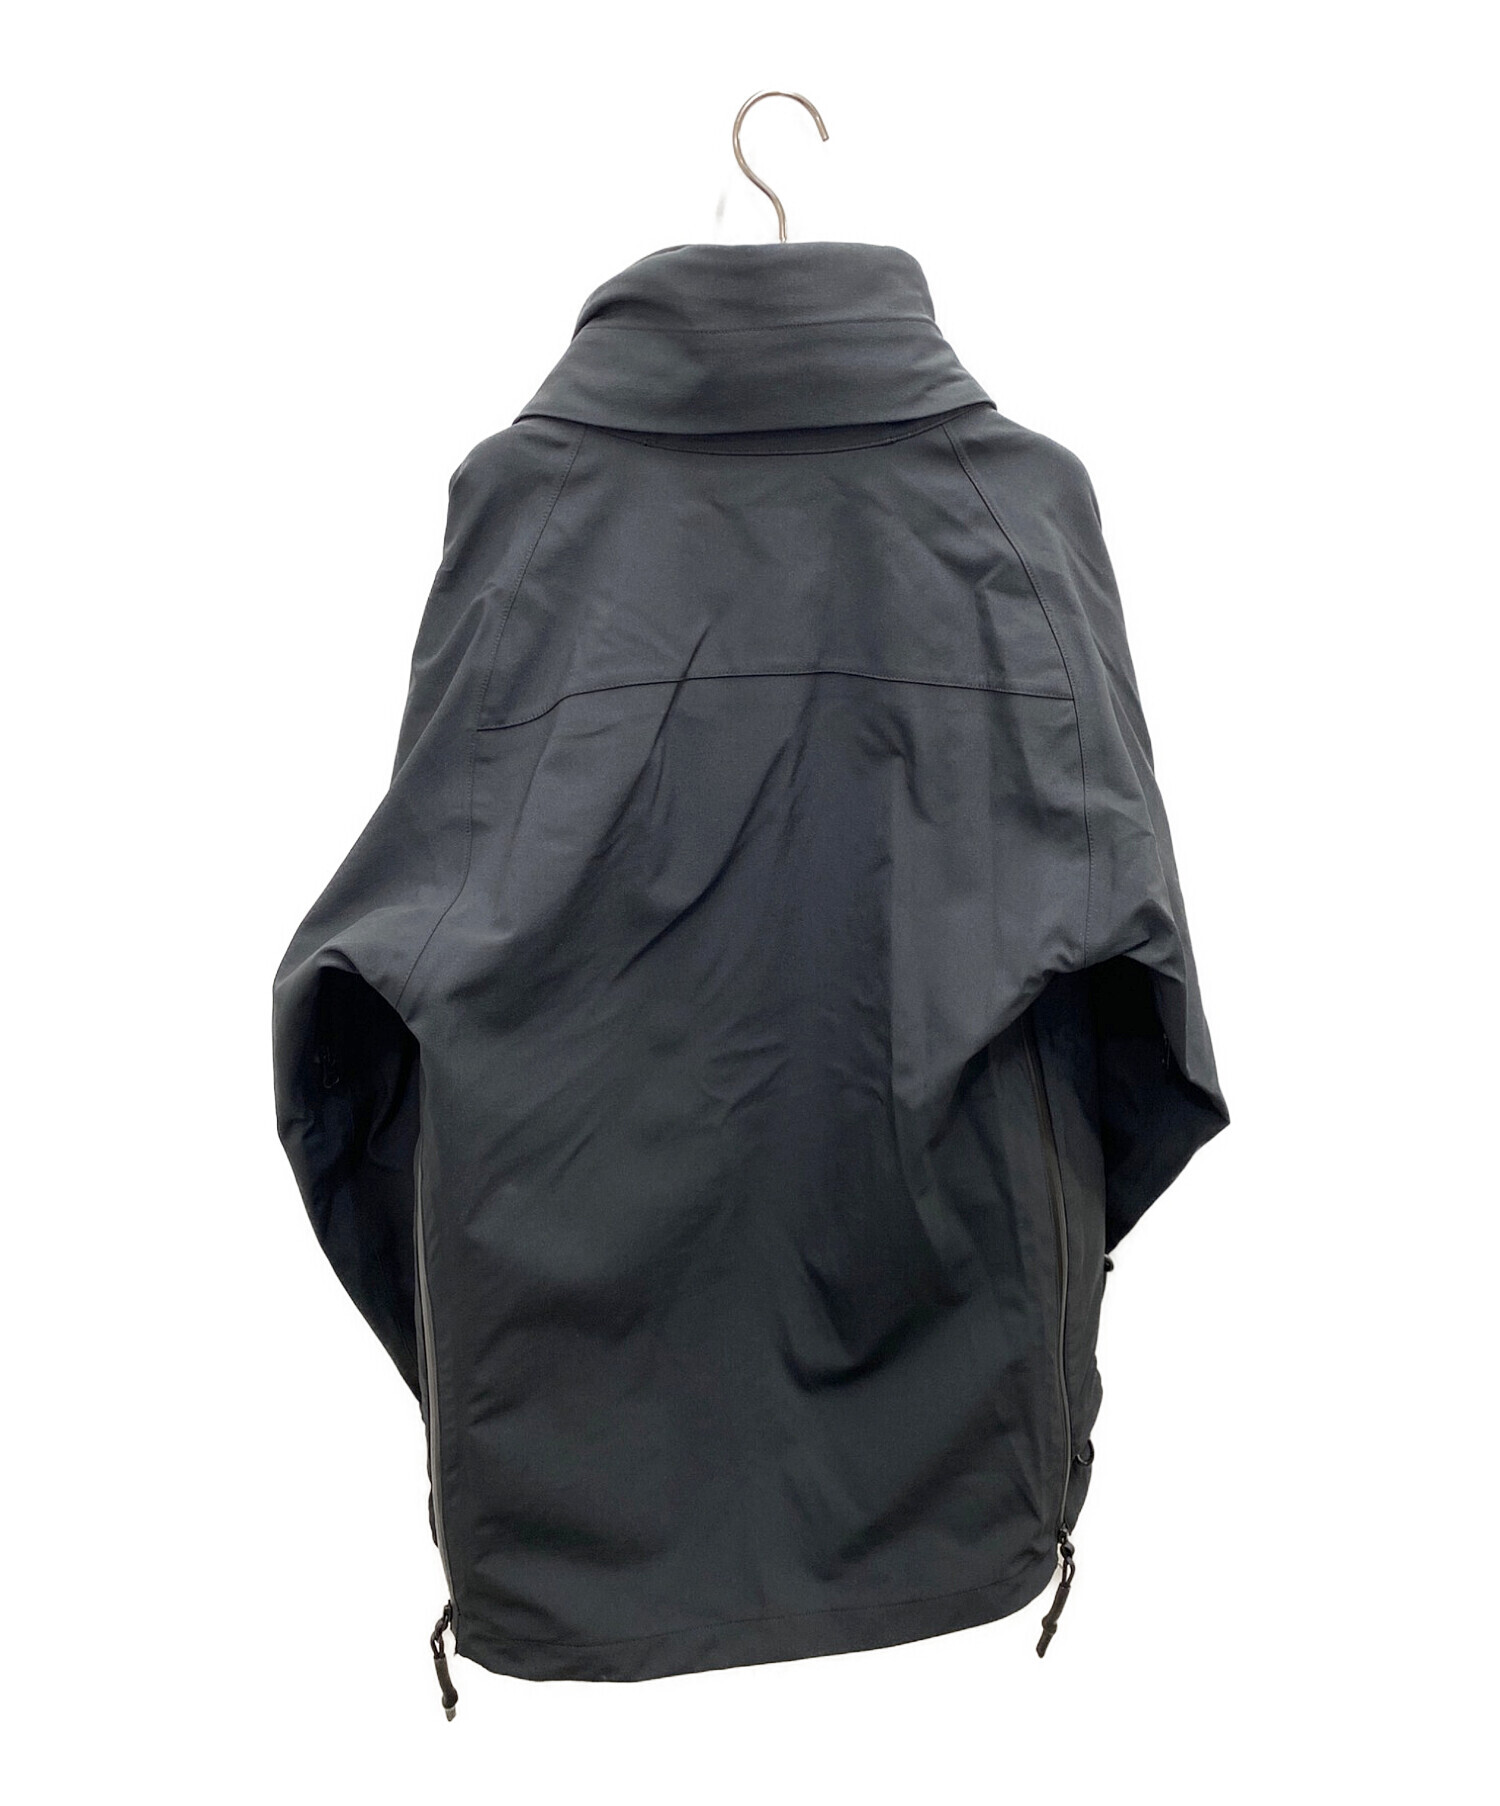 mout recon tailor (マウトリーコンテーラー) New Shooting Hardshell Jacket ブラック サイズ:46